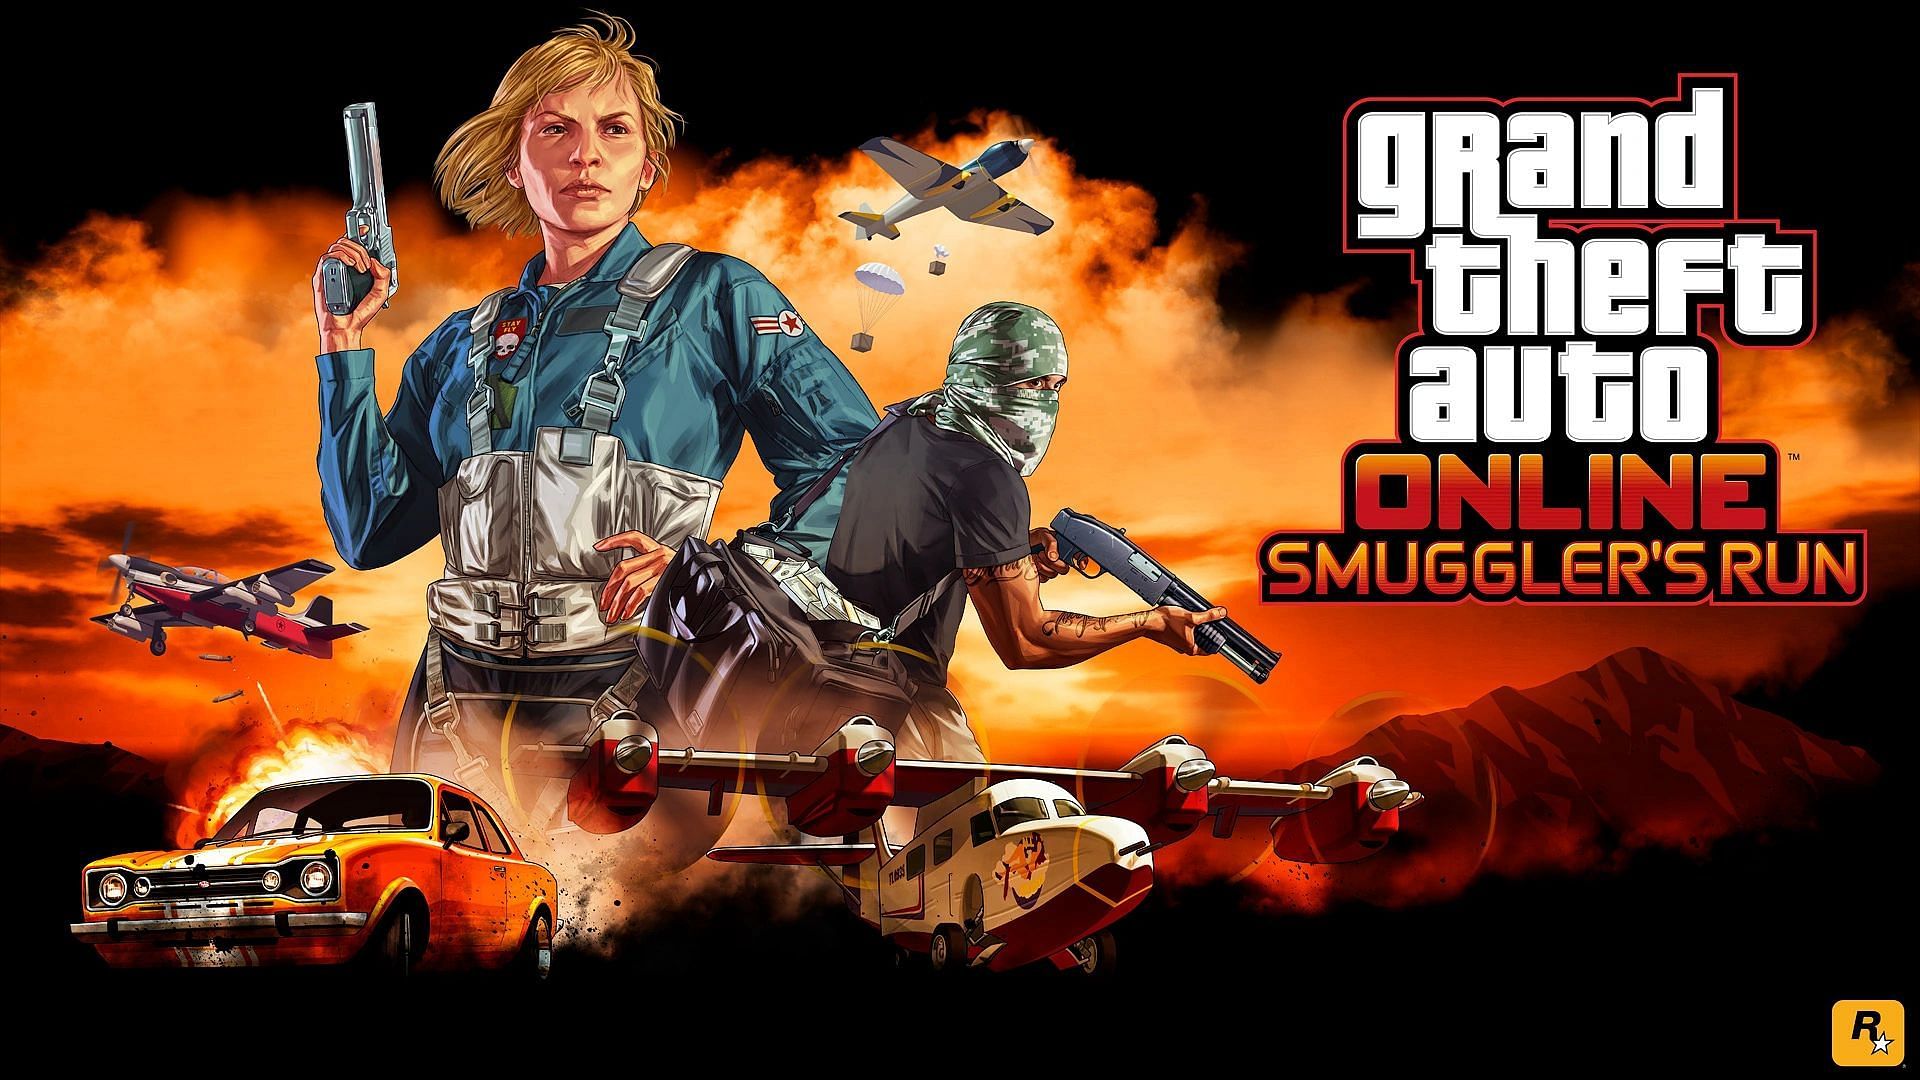 Smugglers Run in GTA Online ( Image via gta.fandom.com )